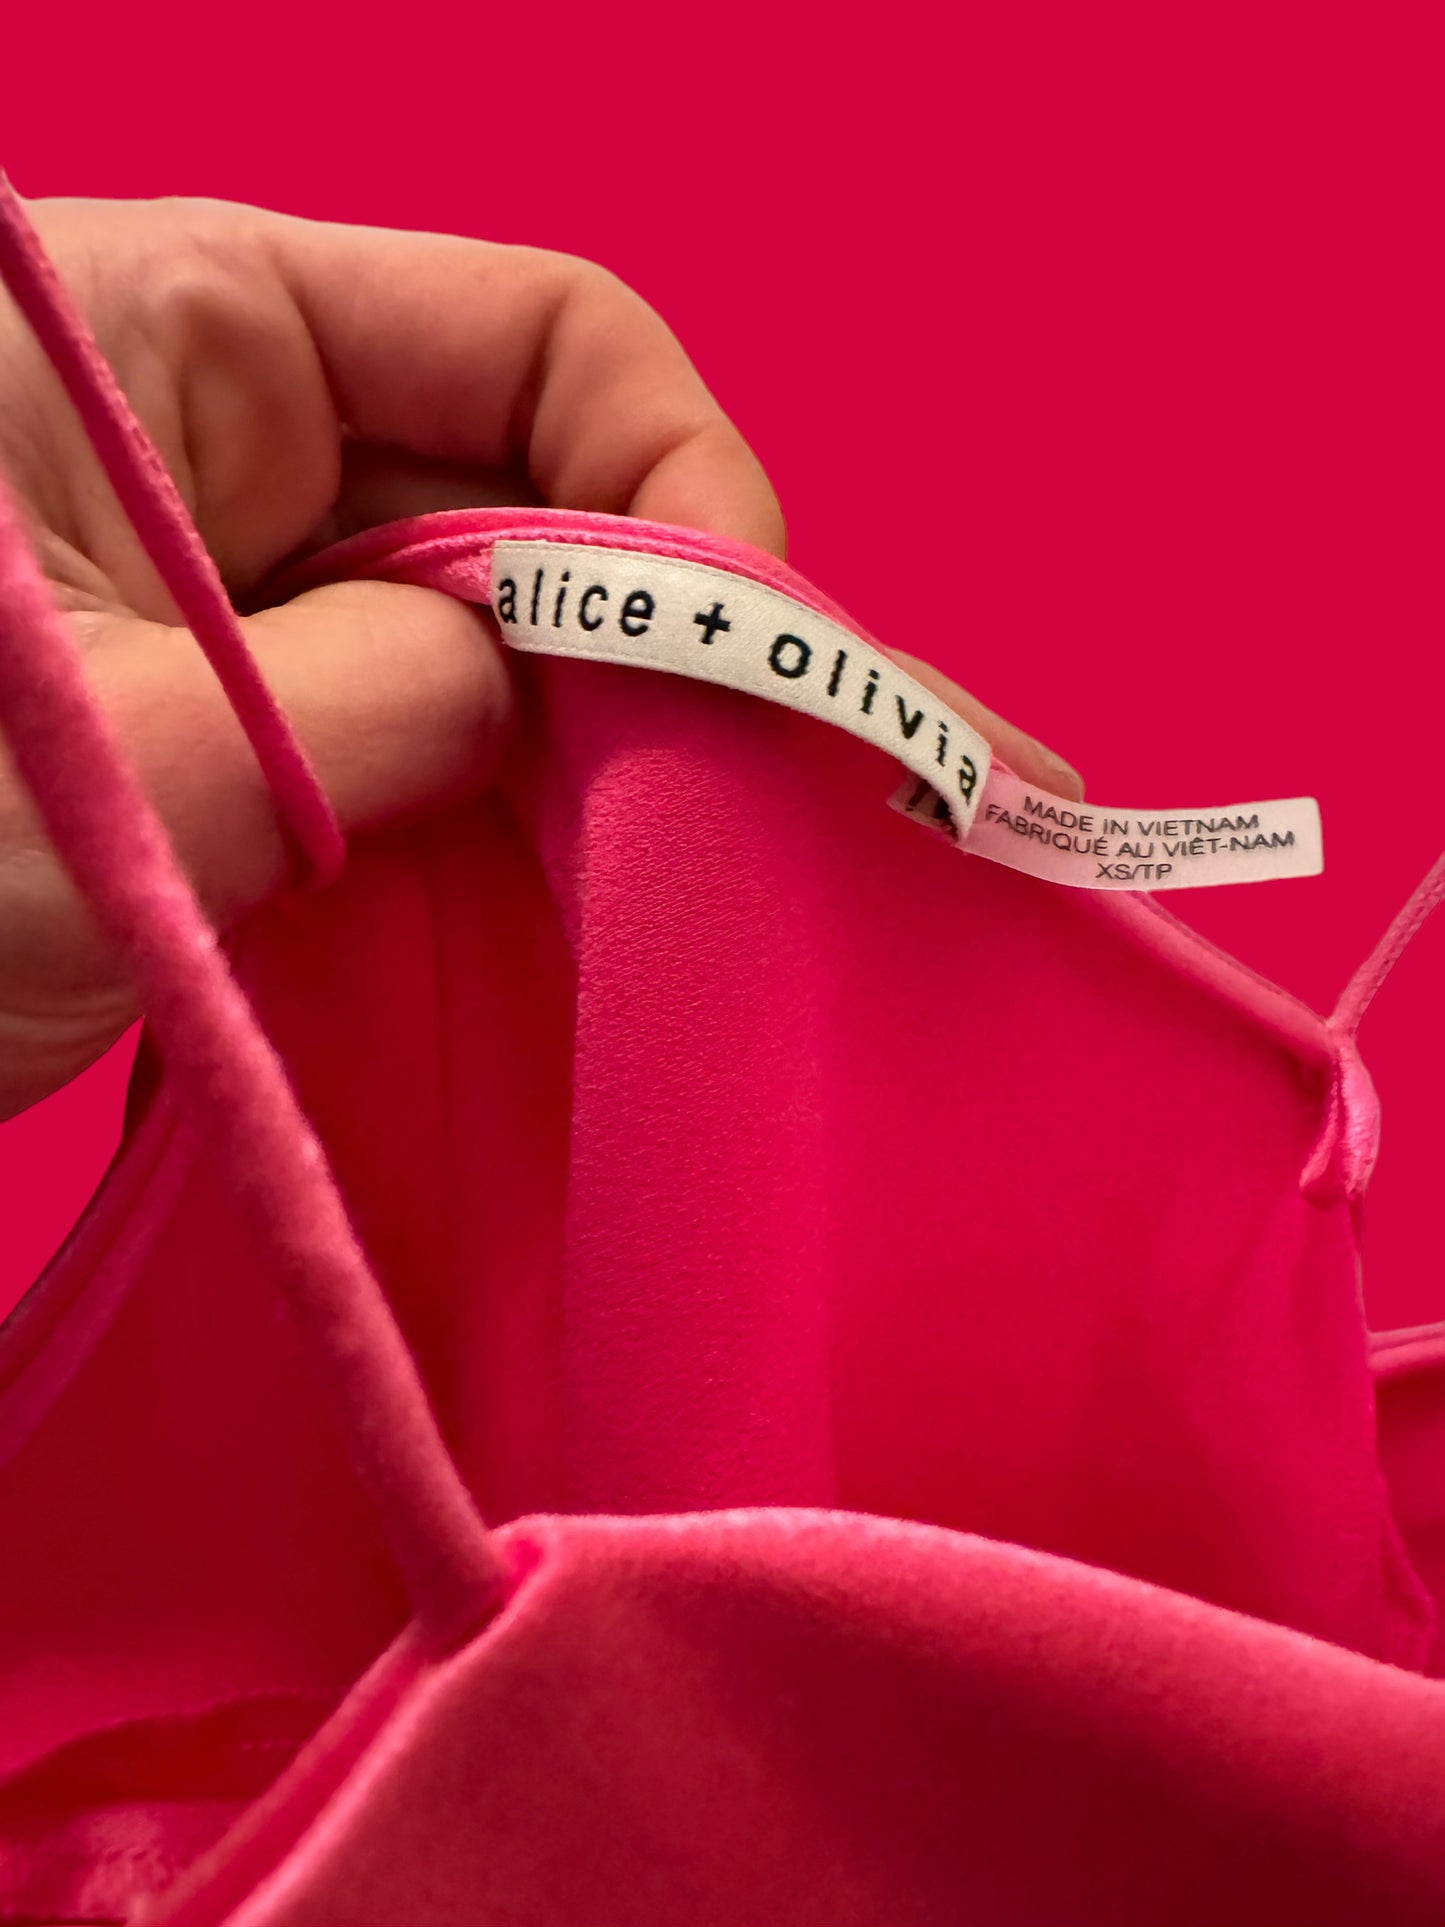 ALICE & OLIVIA pink camisole size xs